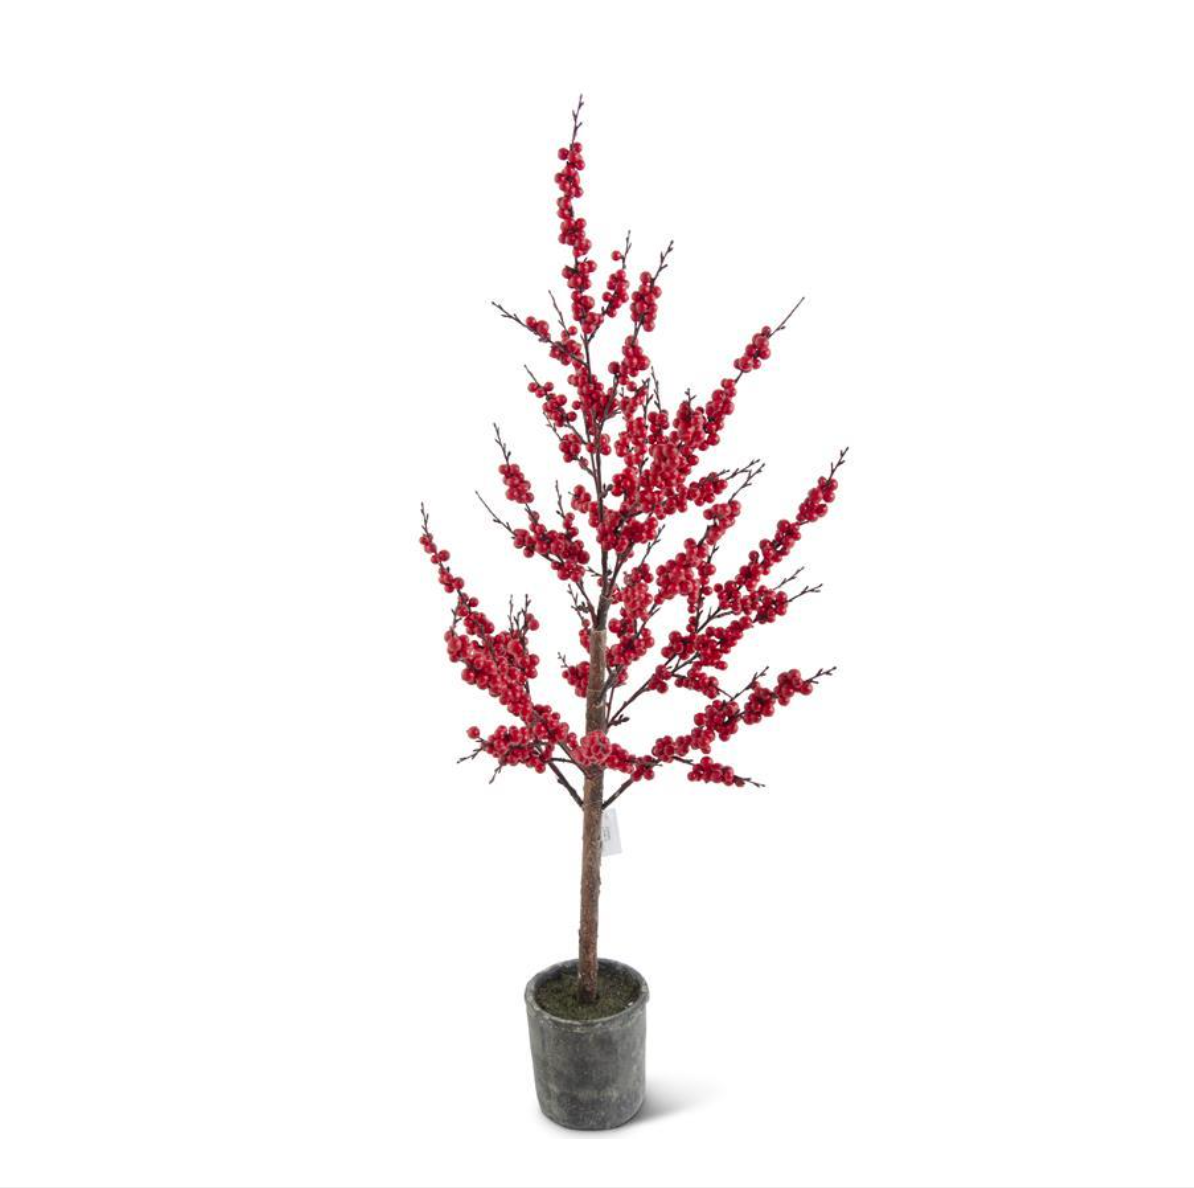 4.5 Foot Red Berry Tree in Pot - K&K INTERIORS - Compralo en CorinneRegalos.com